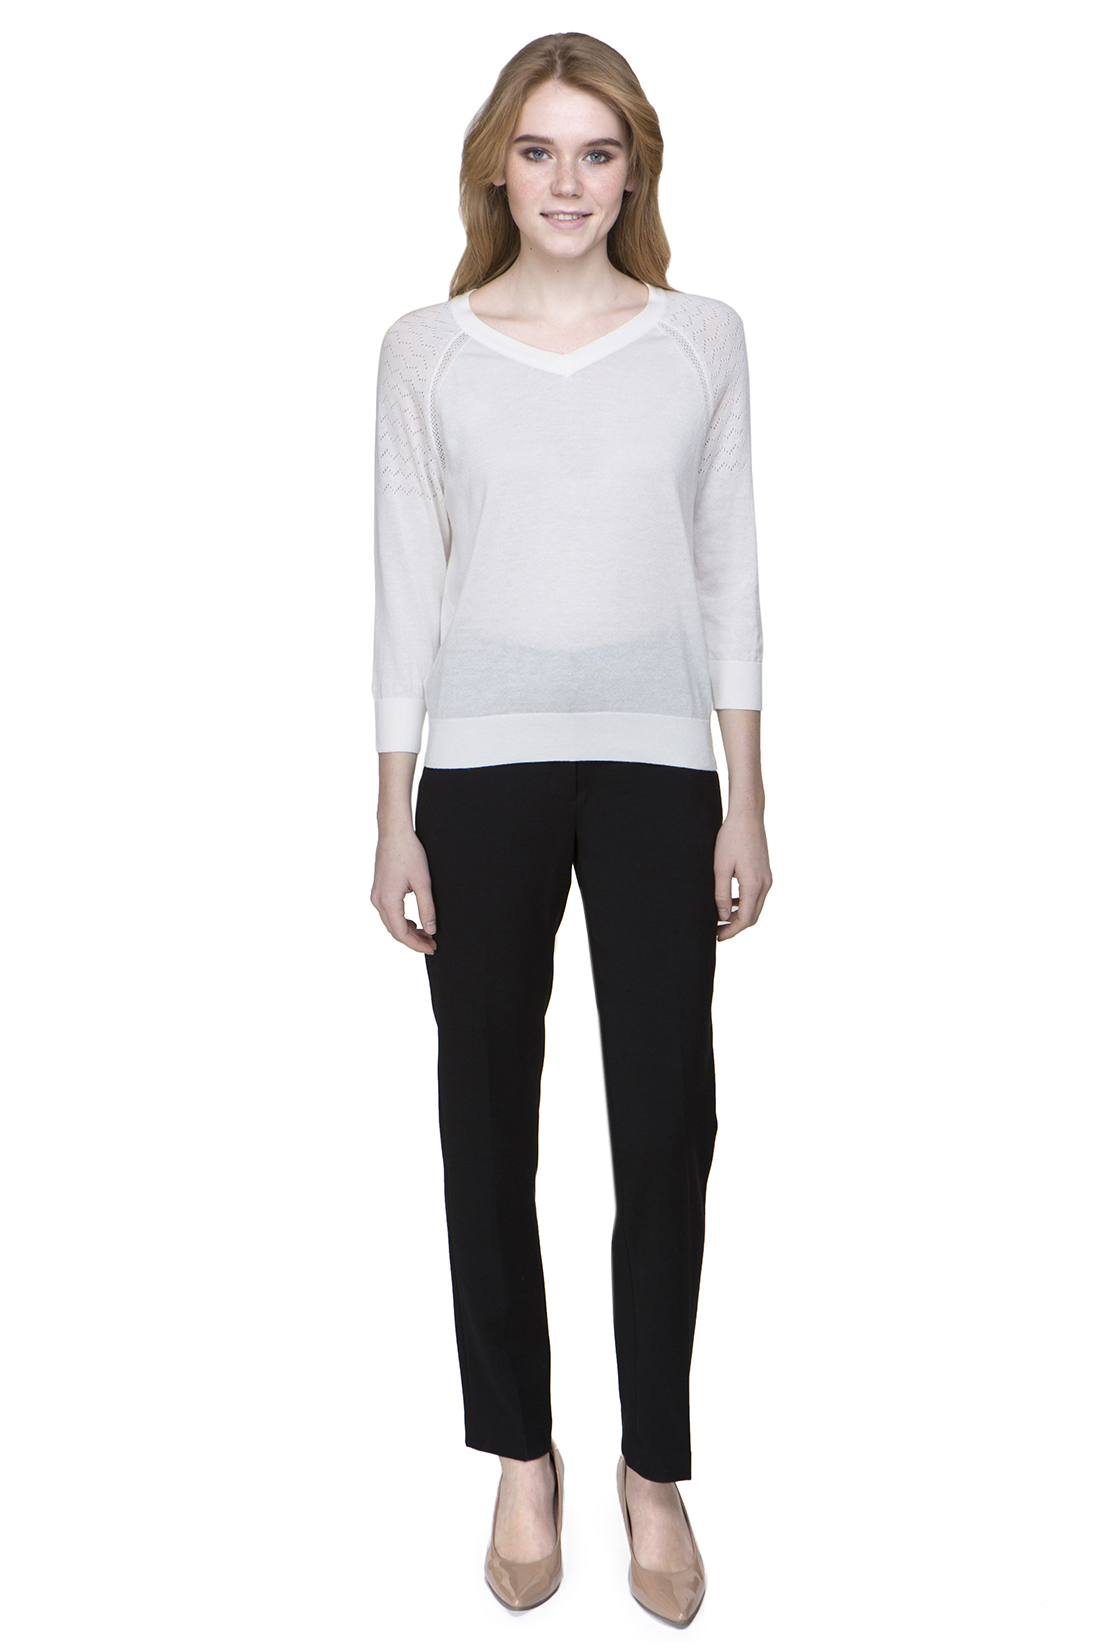 Пуловер с ажурными рукавами (арт. baon B137007), размер XS, цвет белый Пуловер с ажурными рукавами (арт. baon B137007) - фото 5